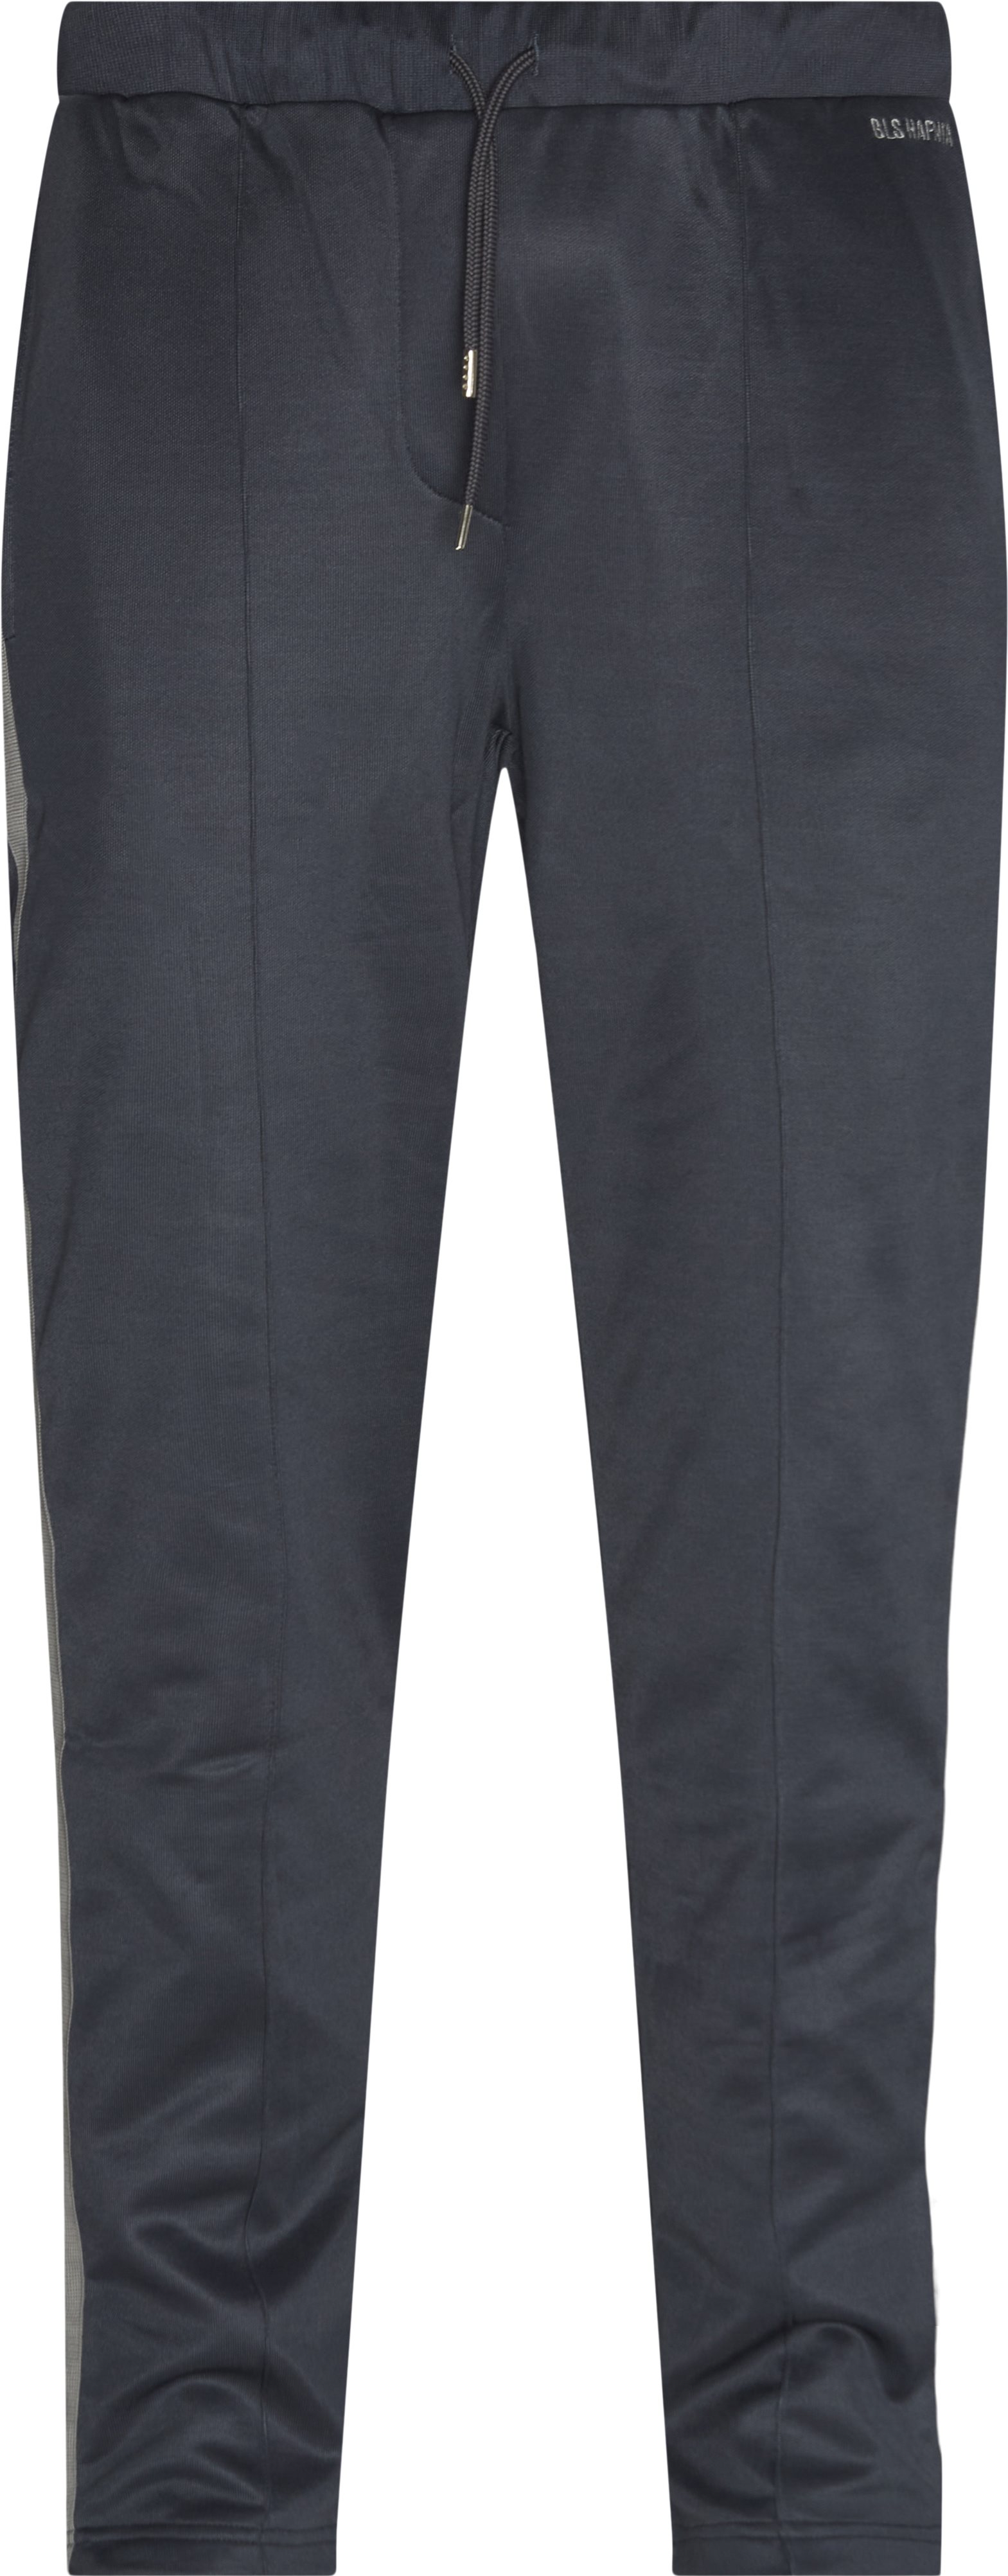 Martinez Stripe Pants - Trousers - Regular fit - Grey